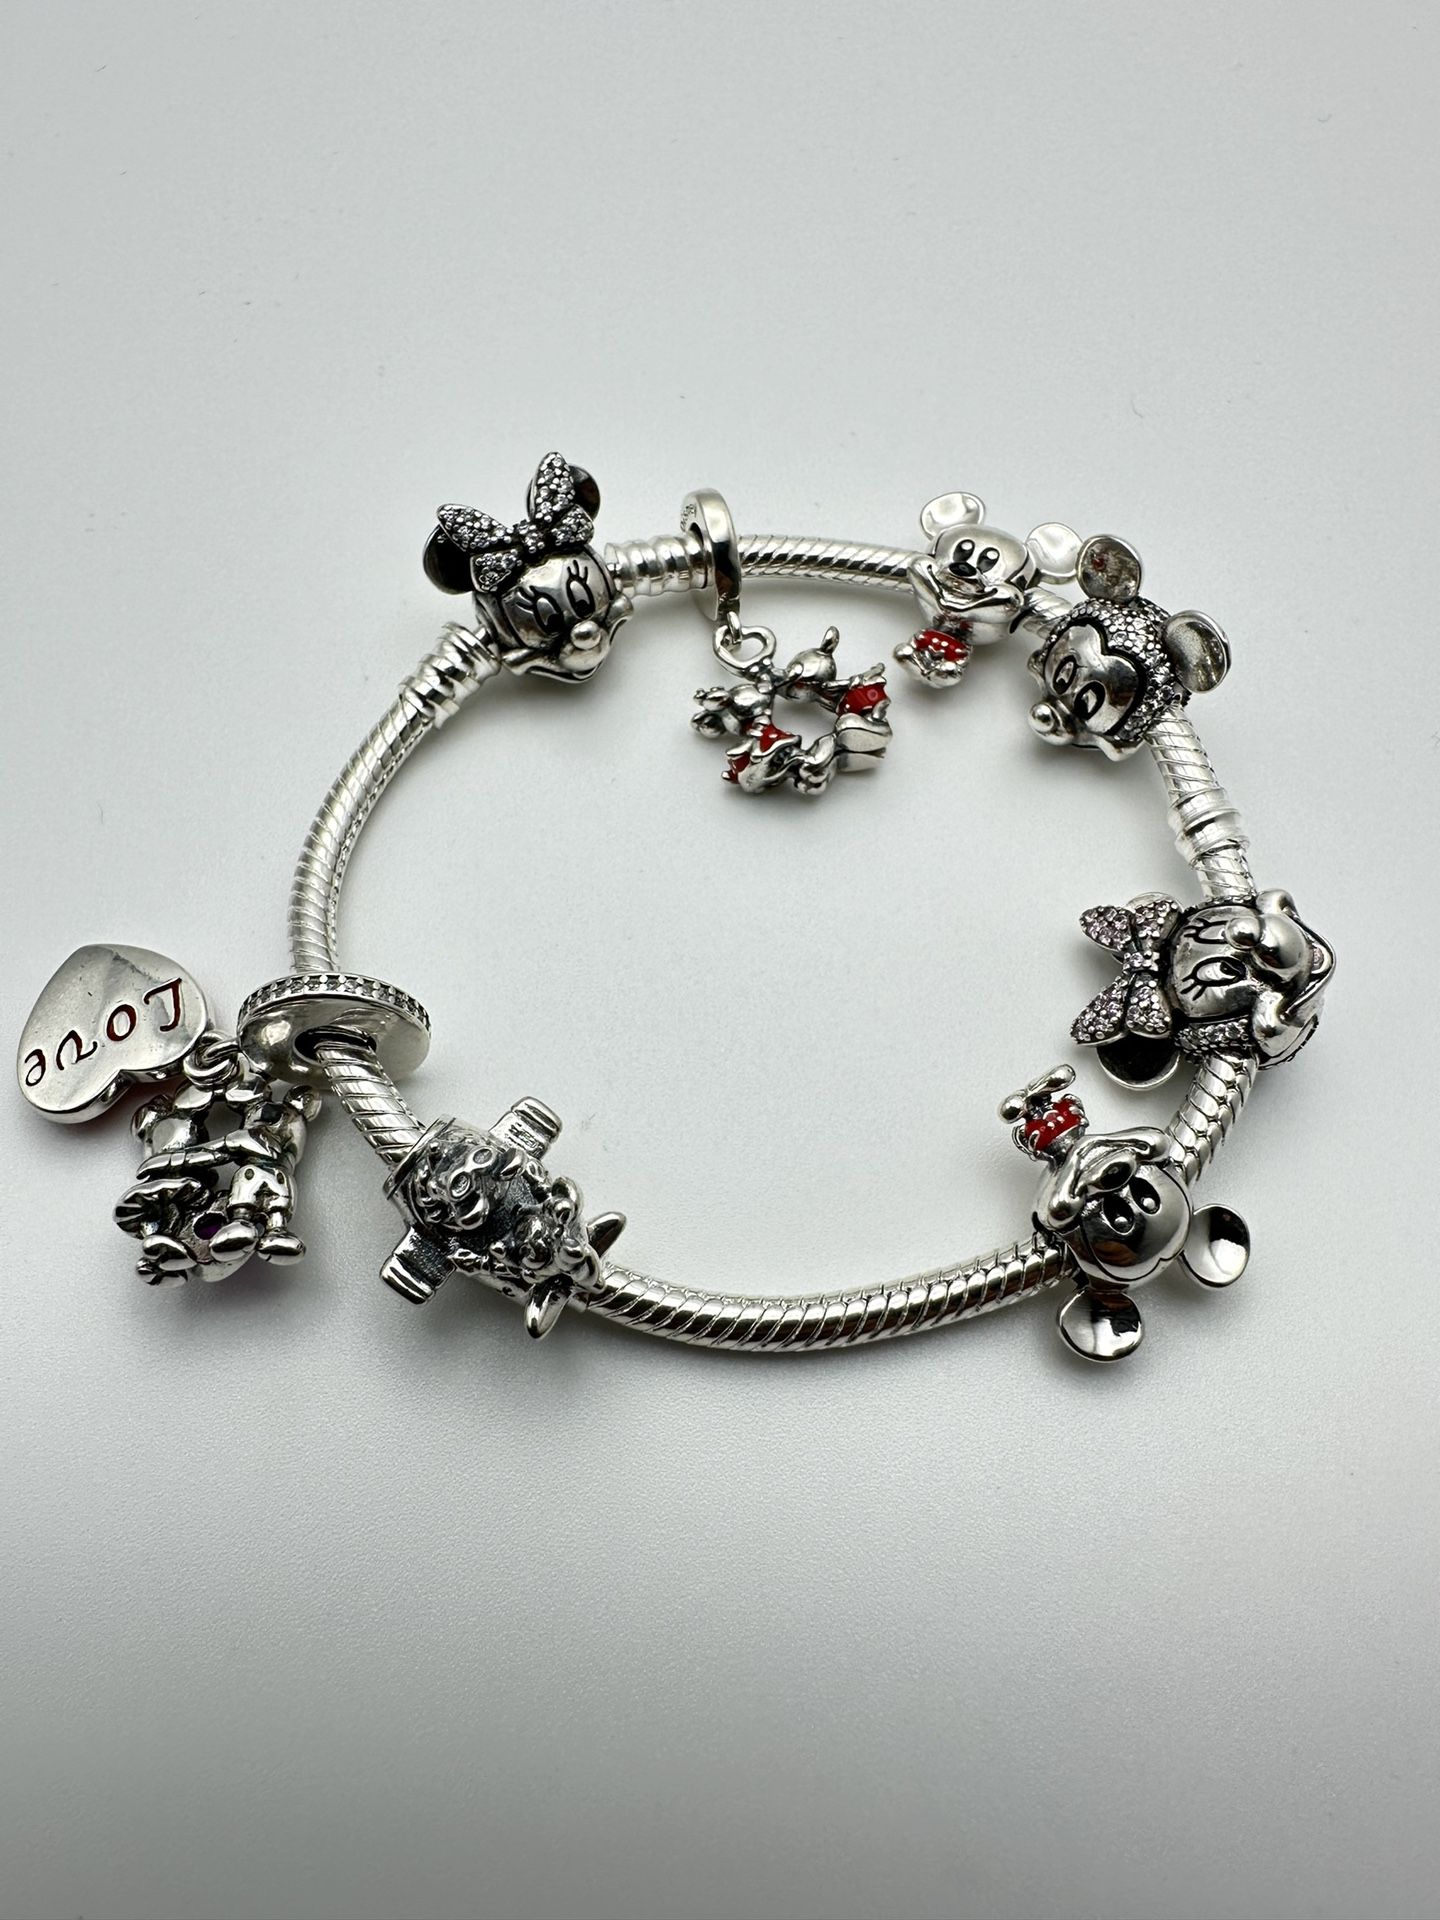 18mm Pandora Bracelet With Disney Charms